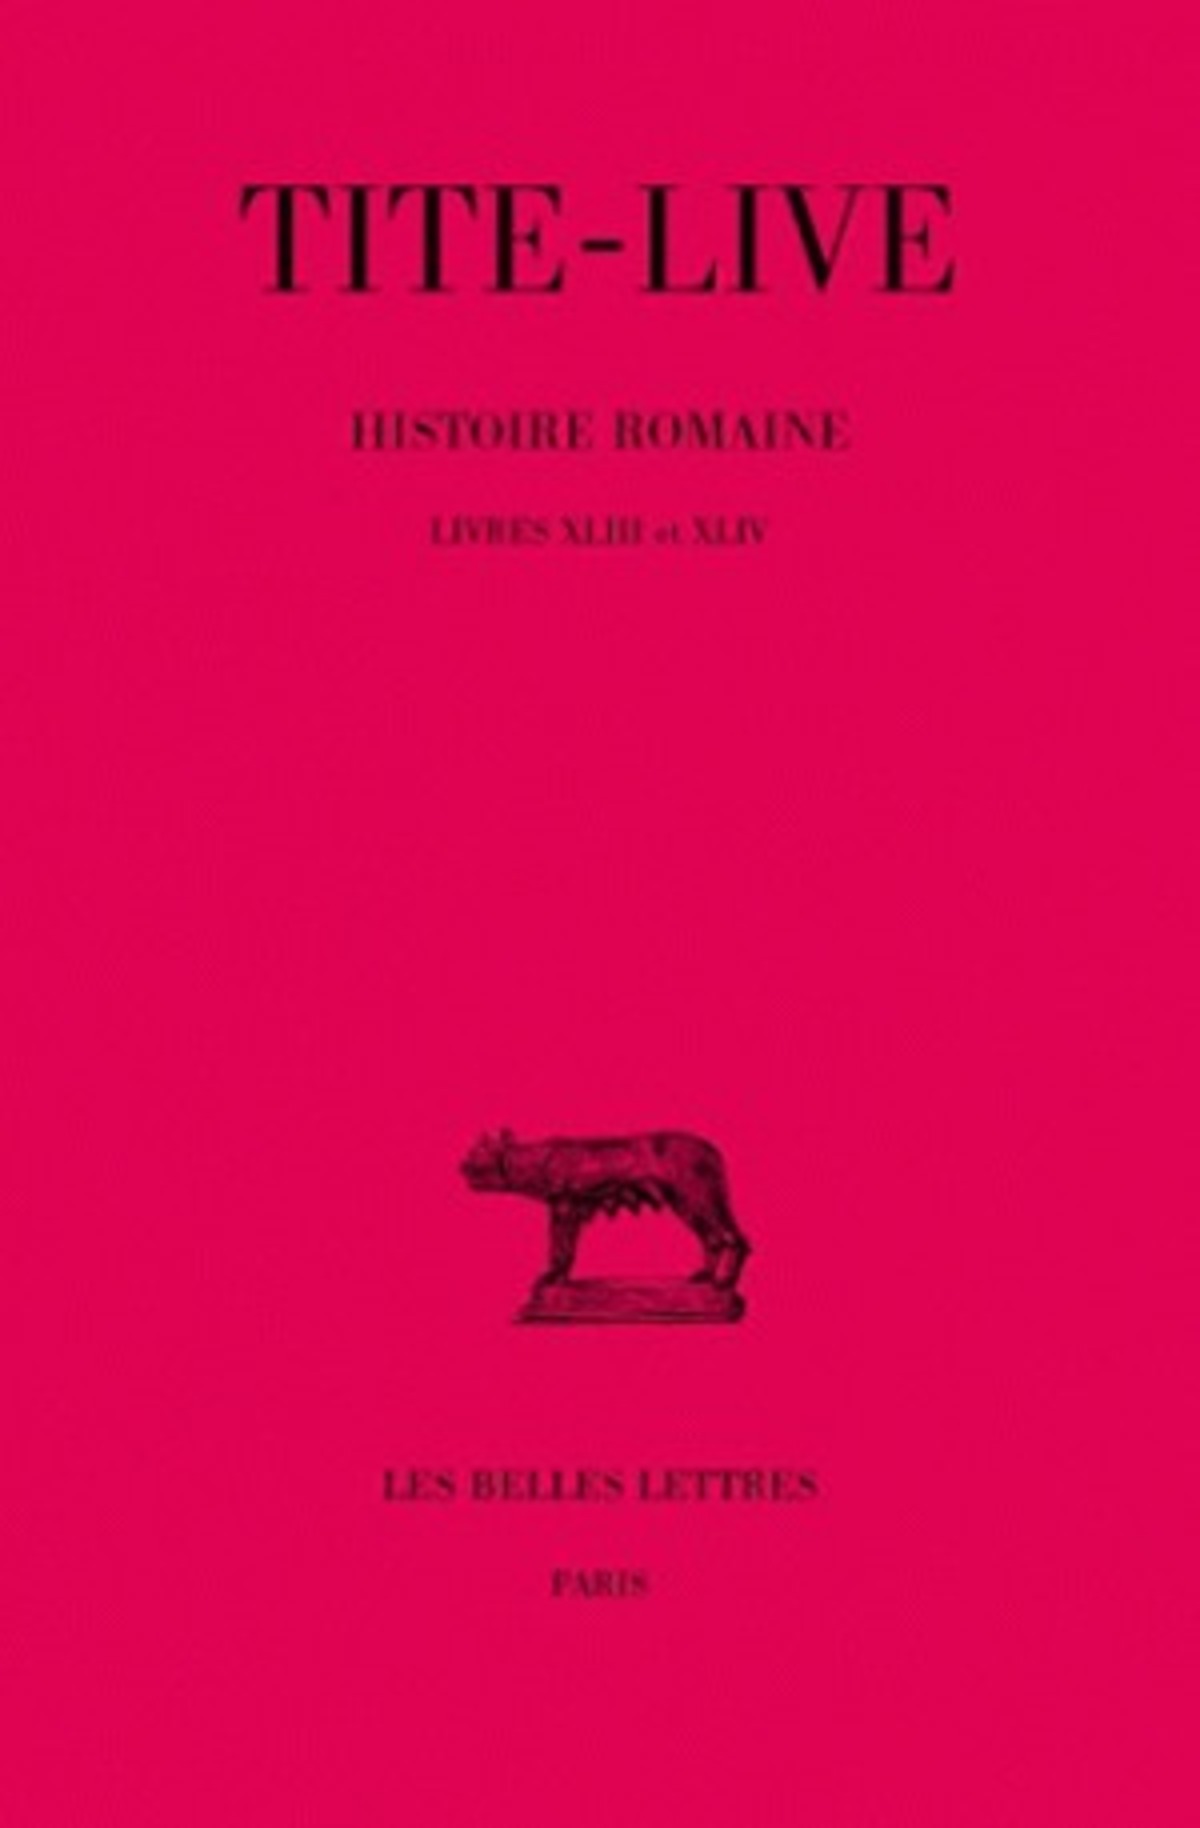 Histoire romaine. Tome XXXII : Livres XLIII-XLIV